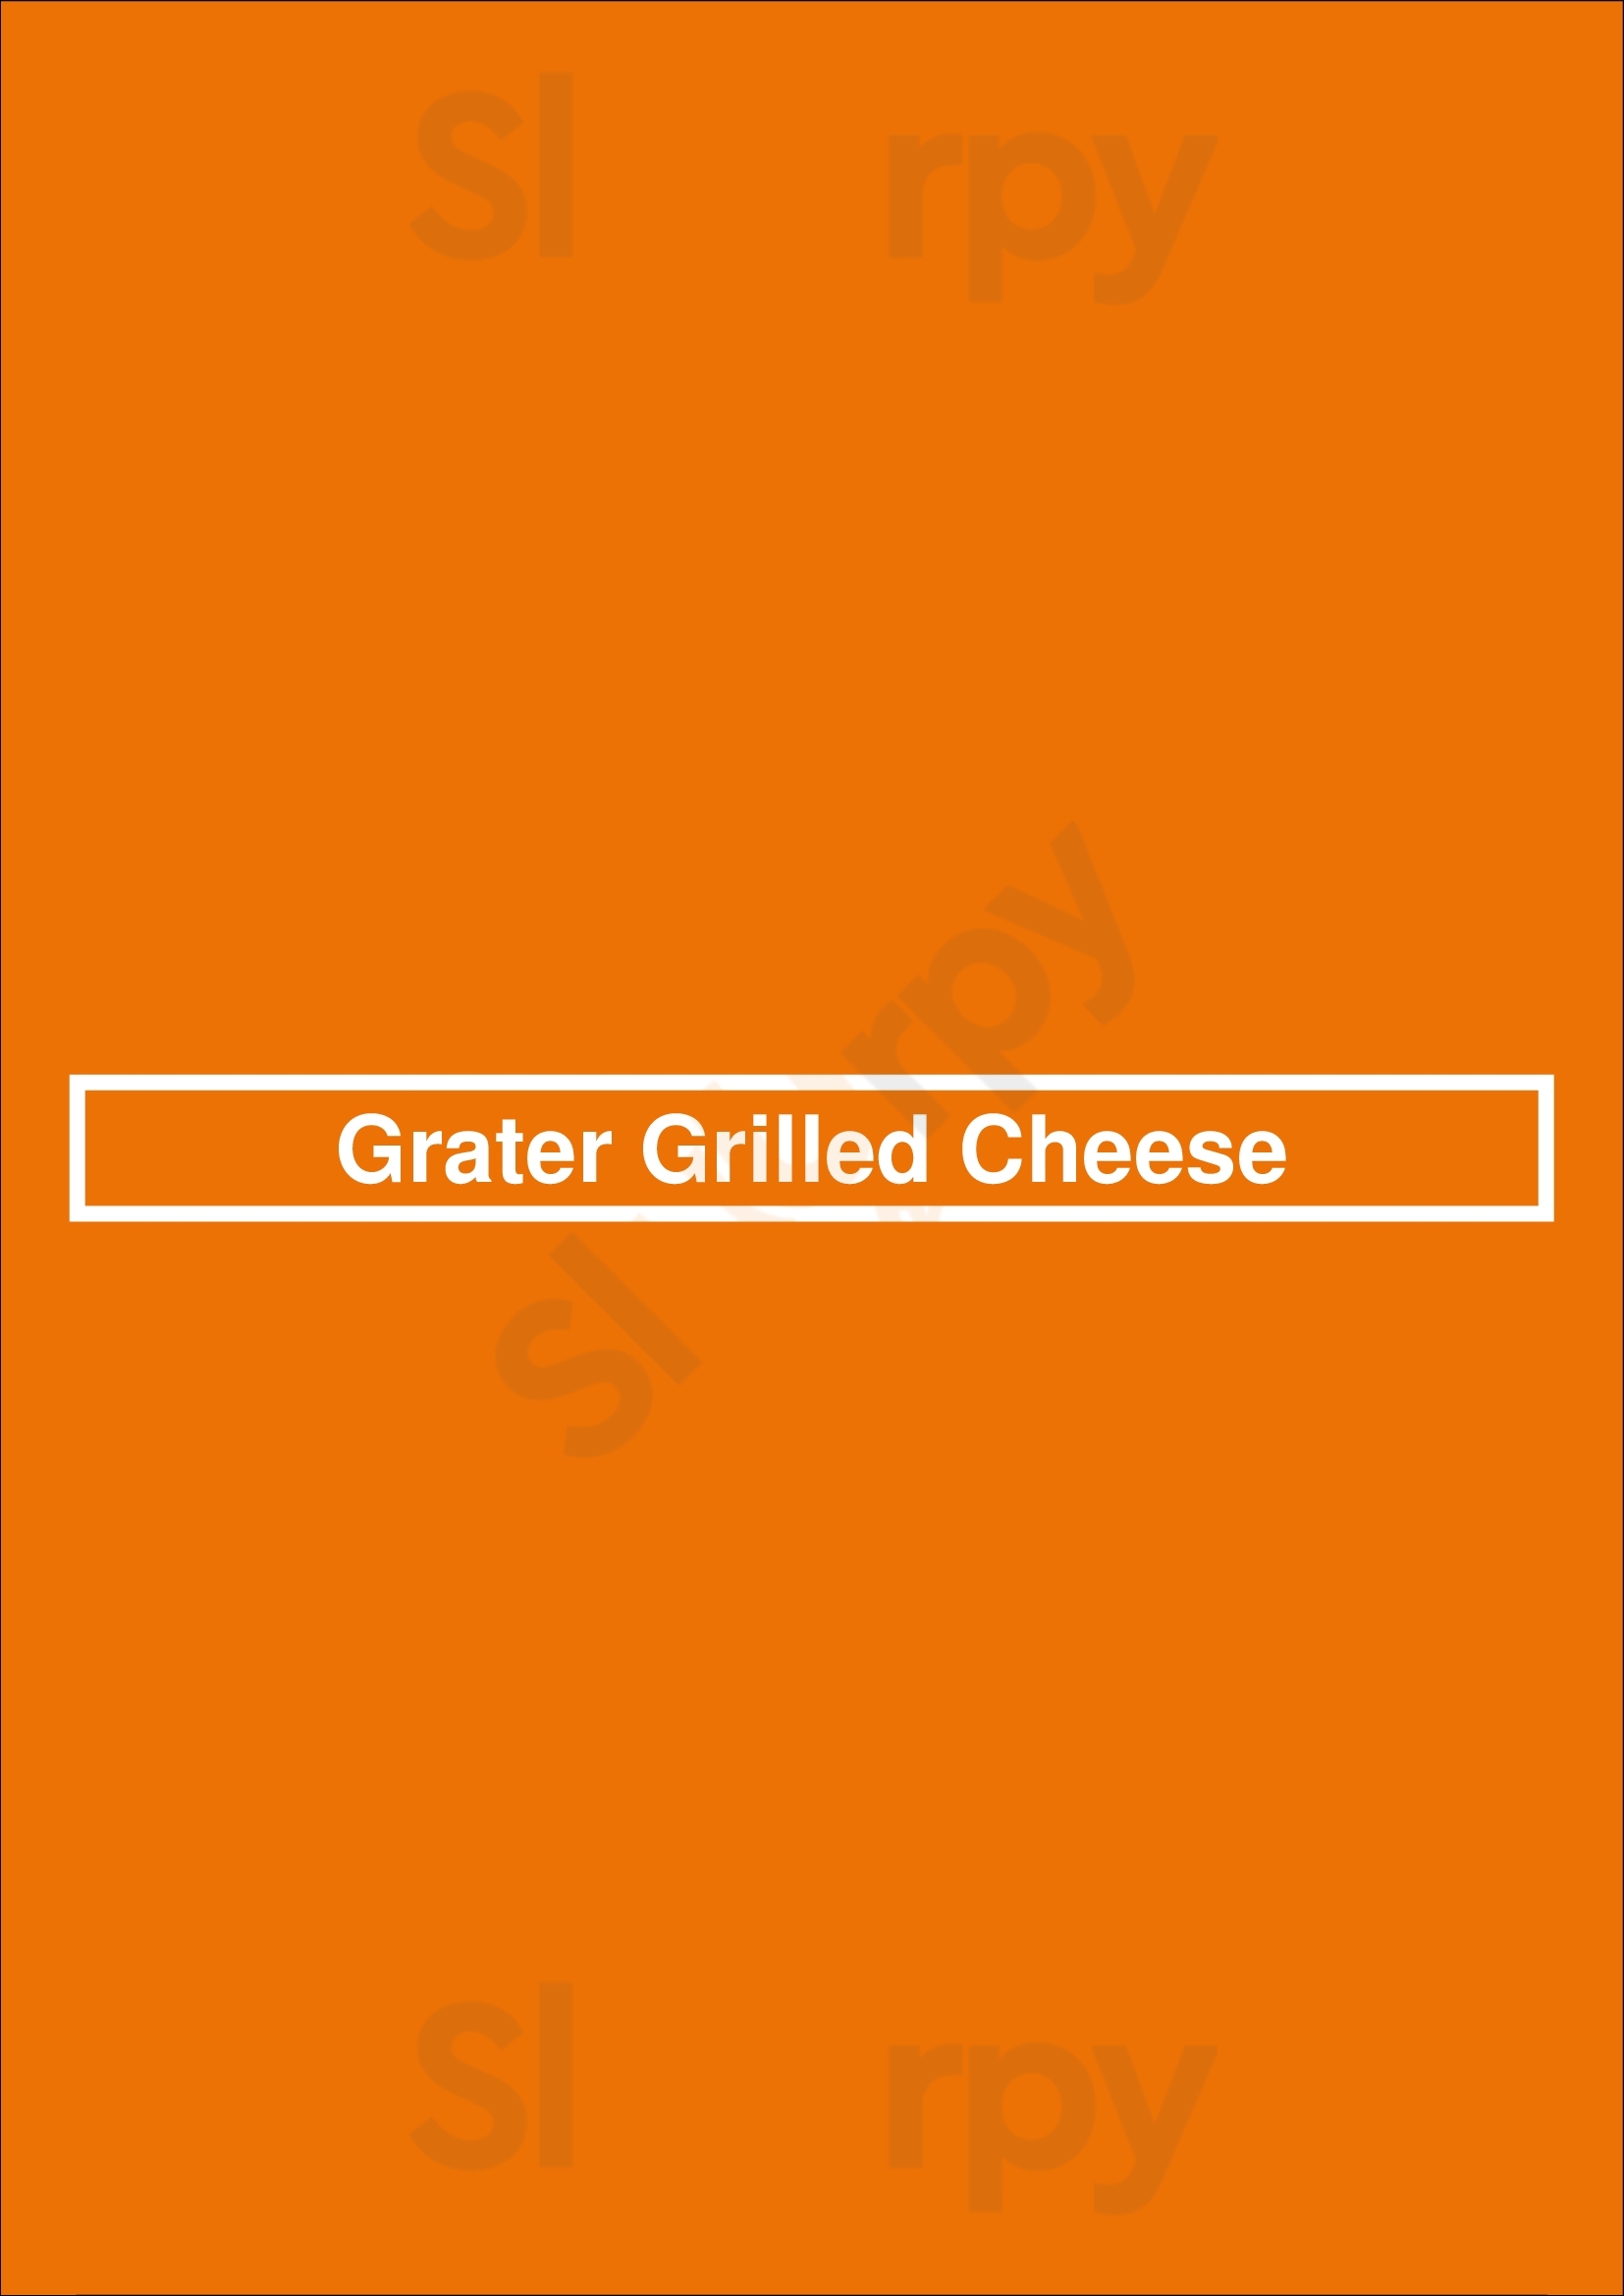 Grater Grilled Cheese Huntington Beach Menu - 1